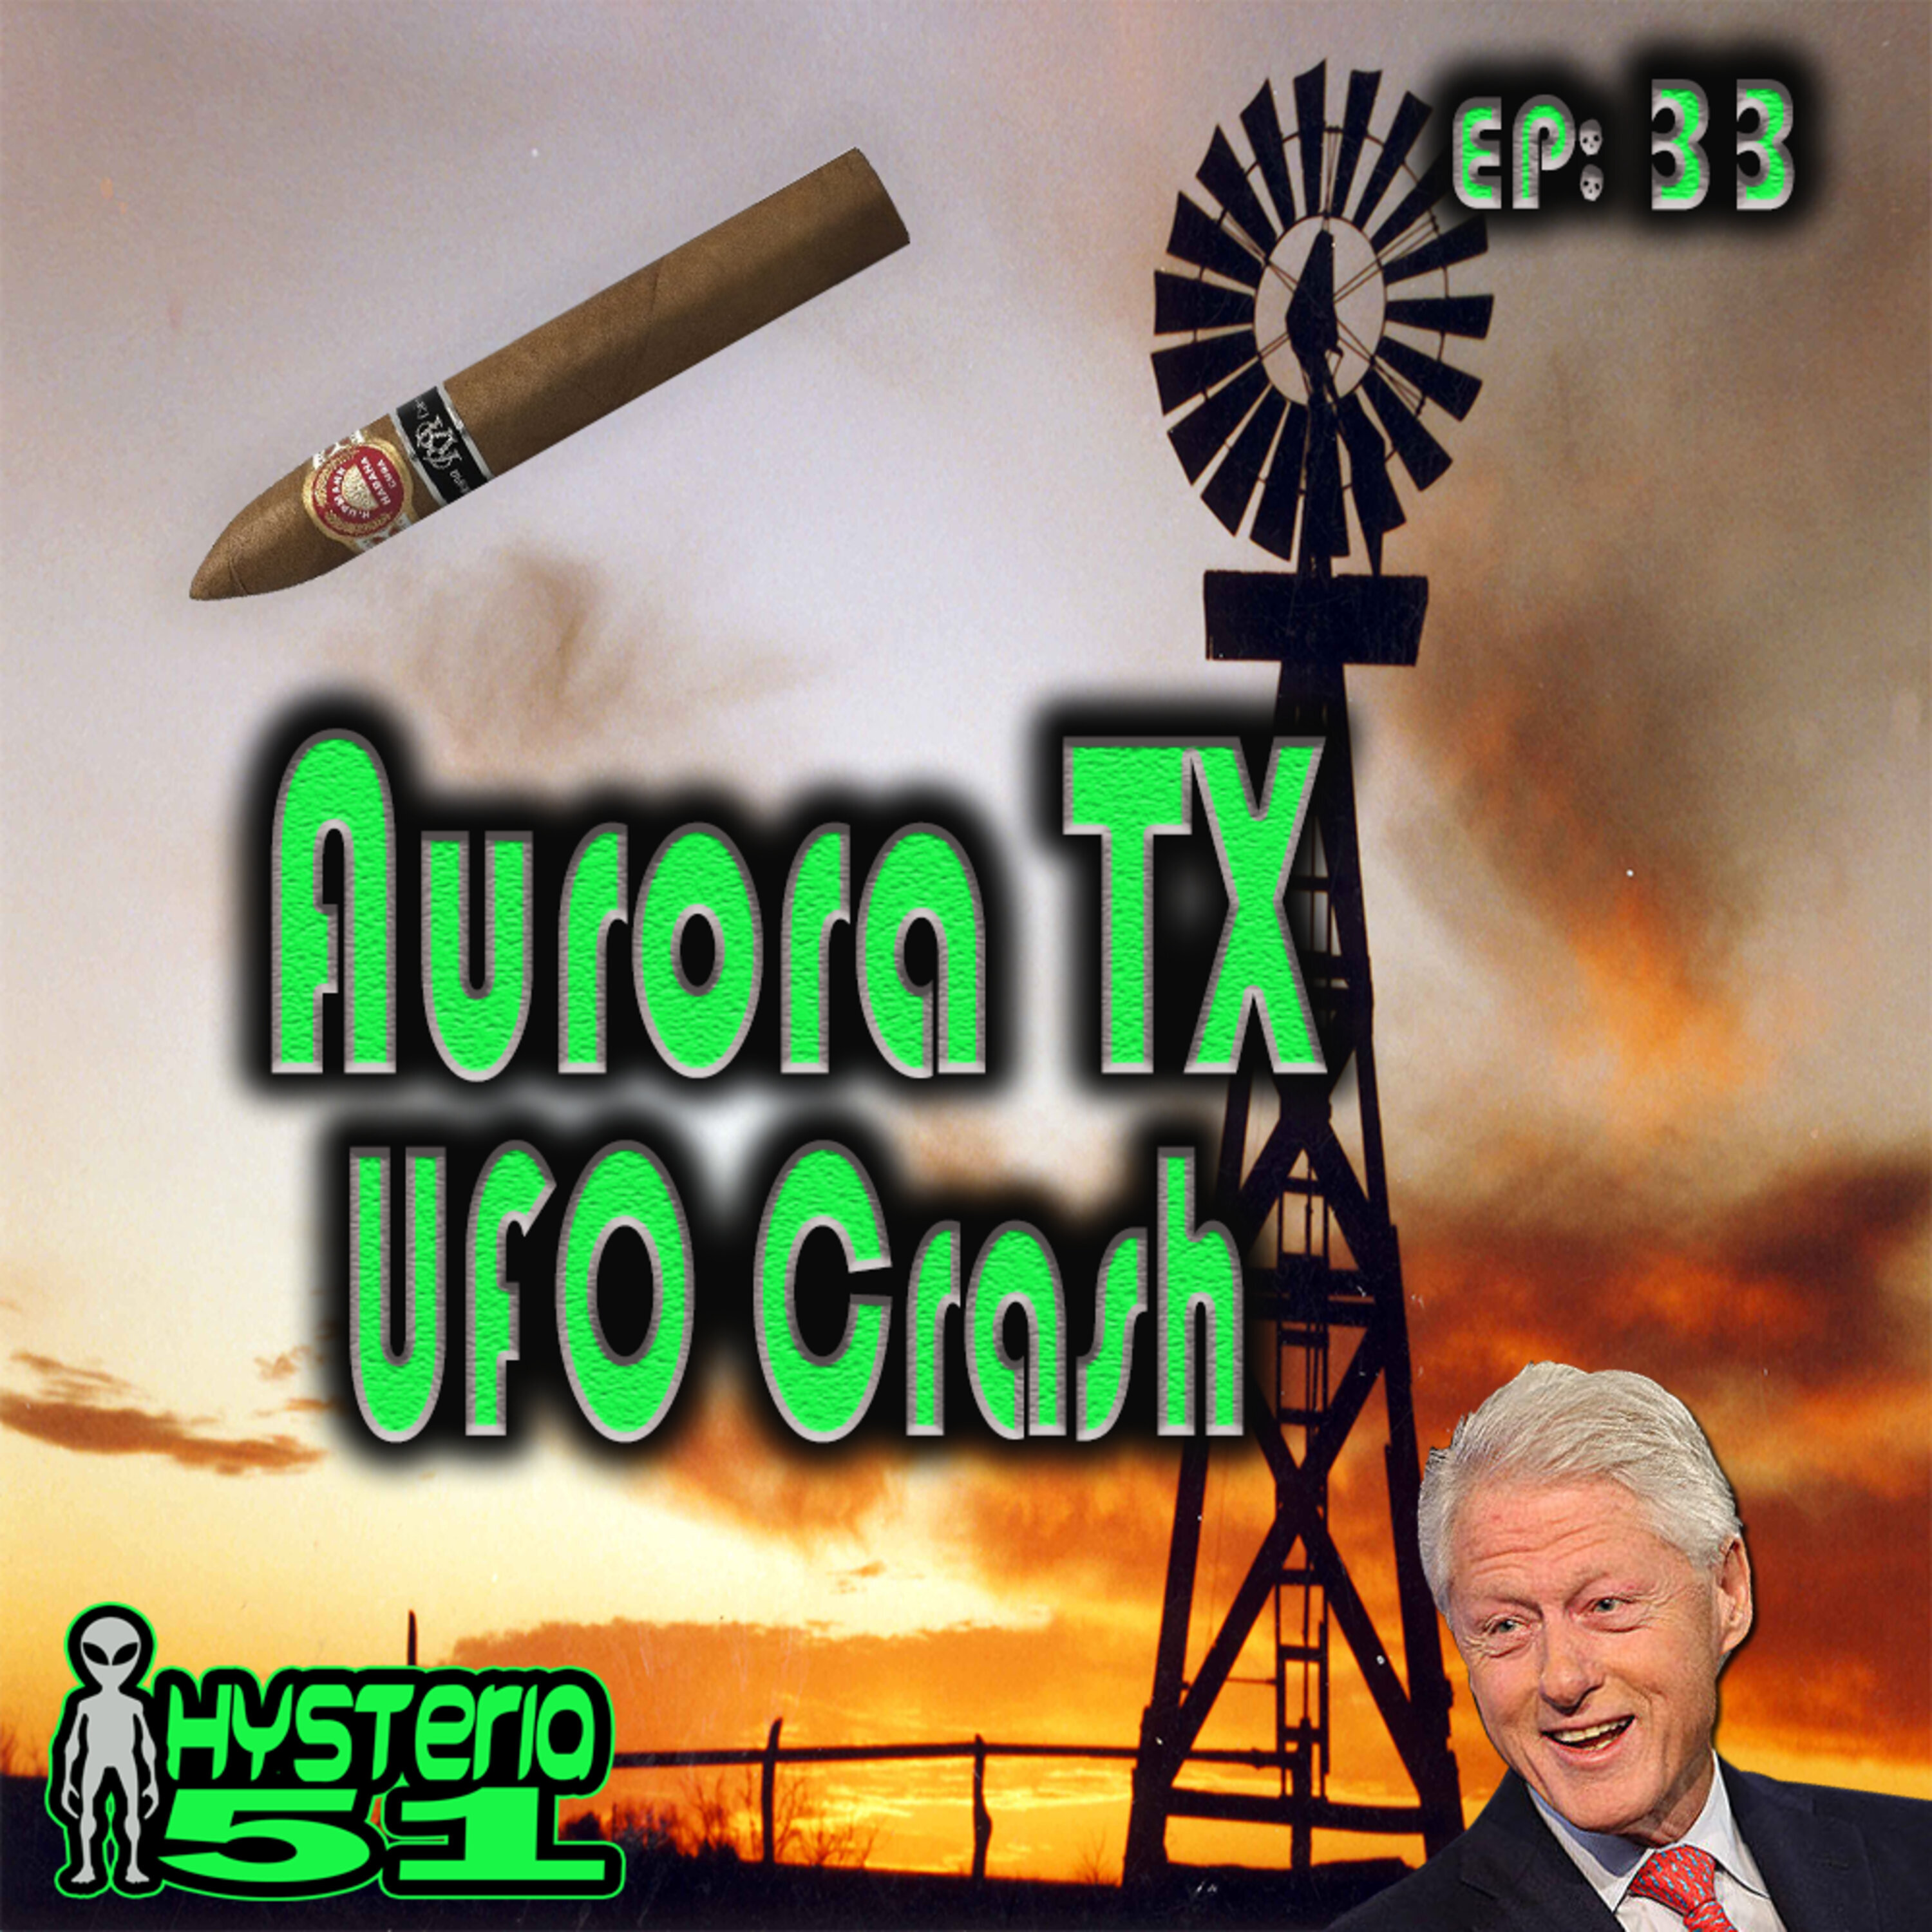 Aurora Texas UFO Crash | 33 Image